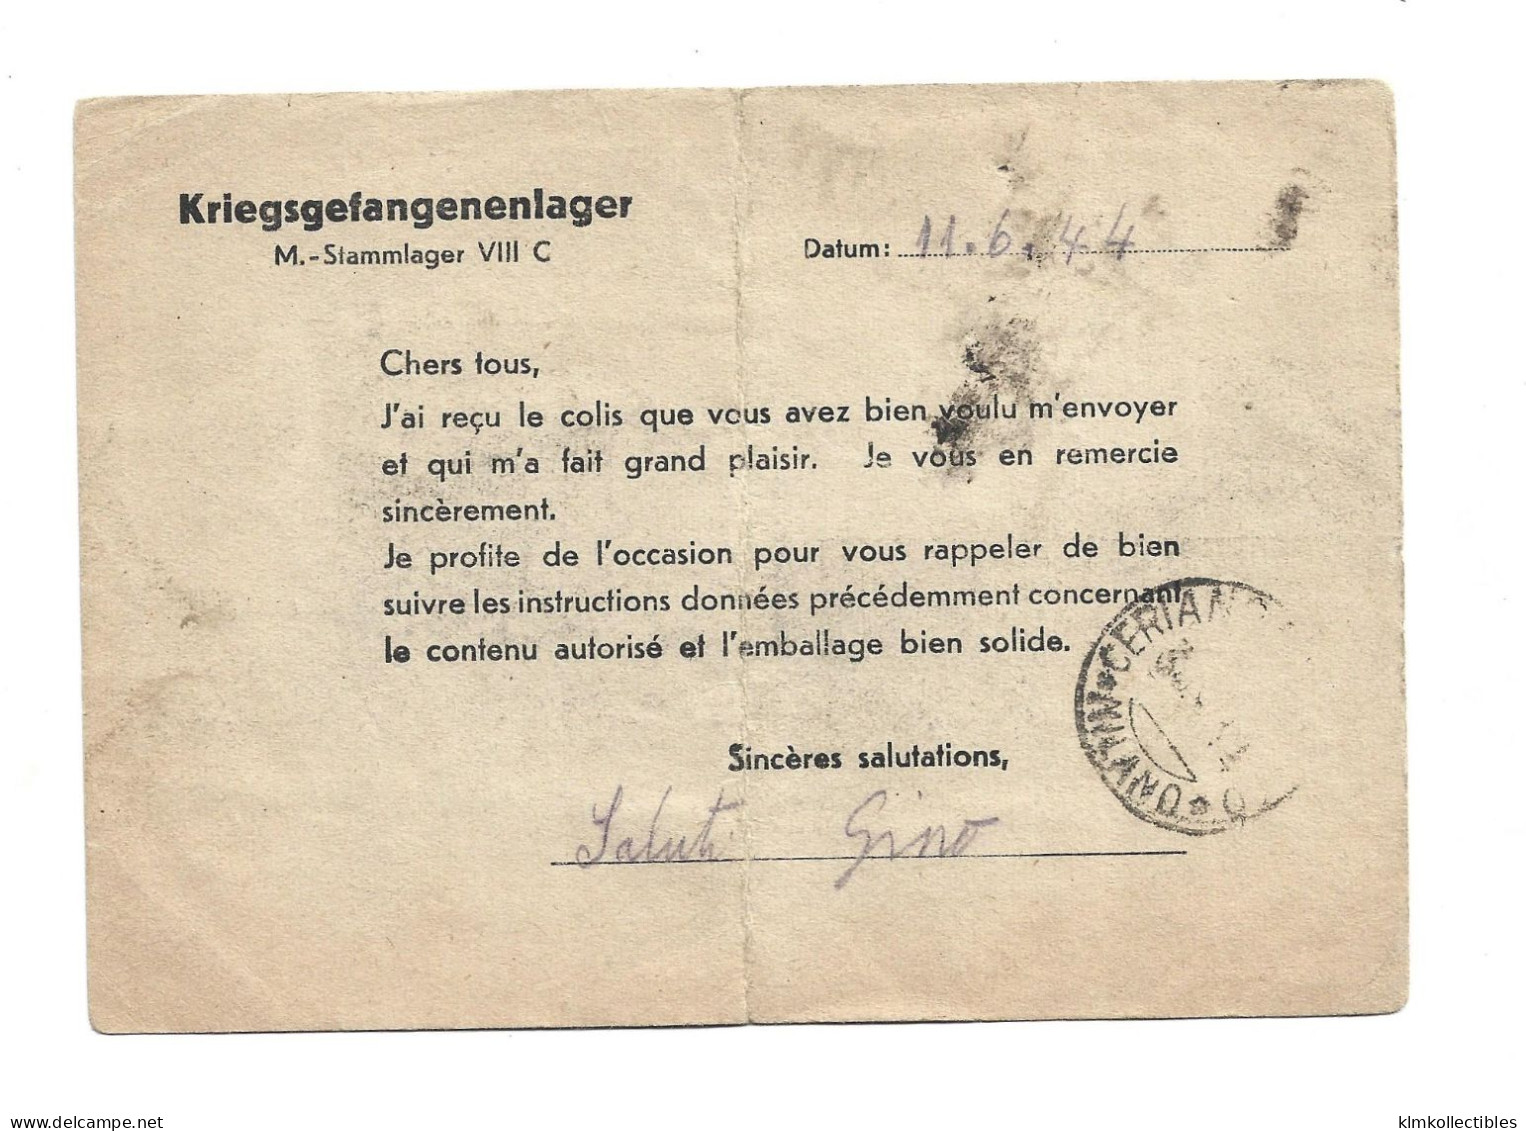 GERMANY DEUTSCHLAND ITALY ITALIA POW SAGAN POLAND LAGER KRIEGSGEFANGENEN PRIGIONIERI DI GUERRA CENSORED CENSURE GEPRÜFT - Prisoners Of War Mail